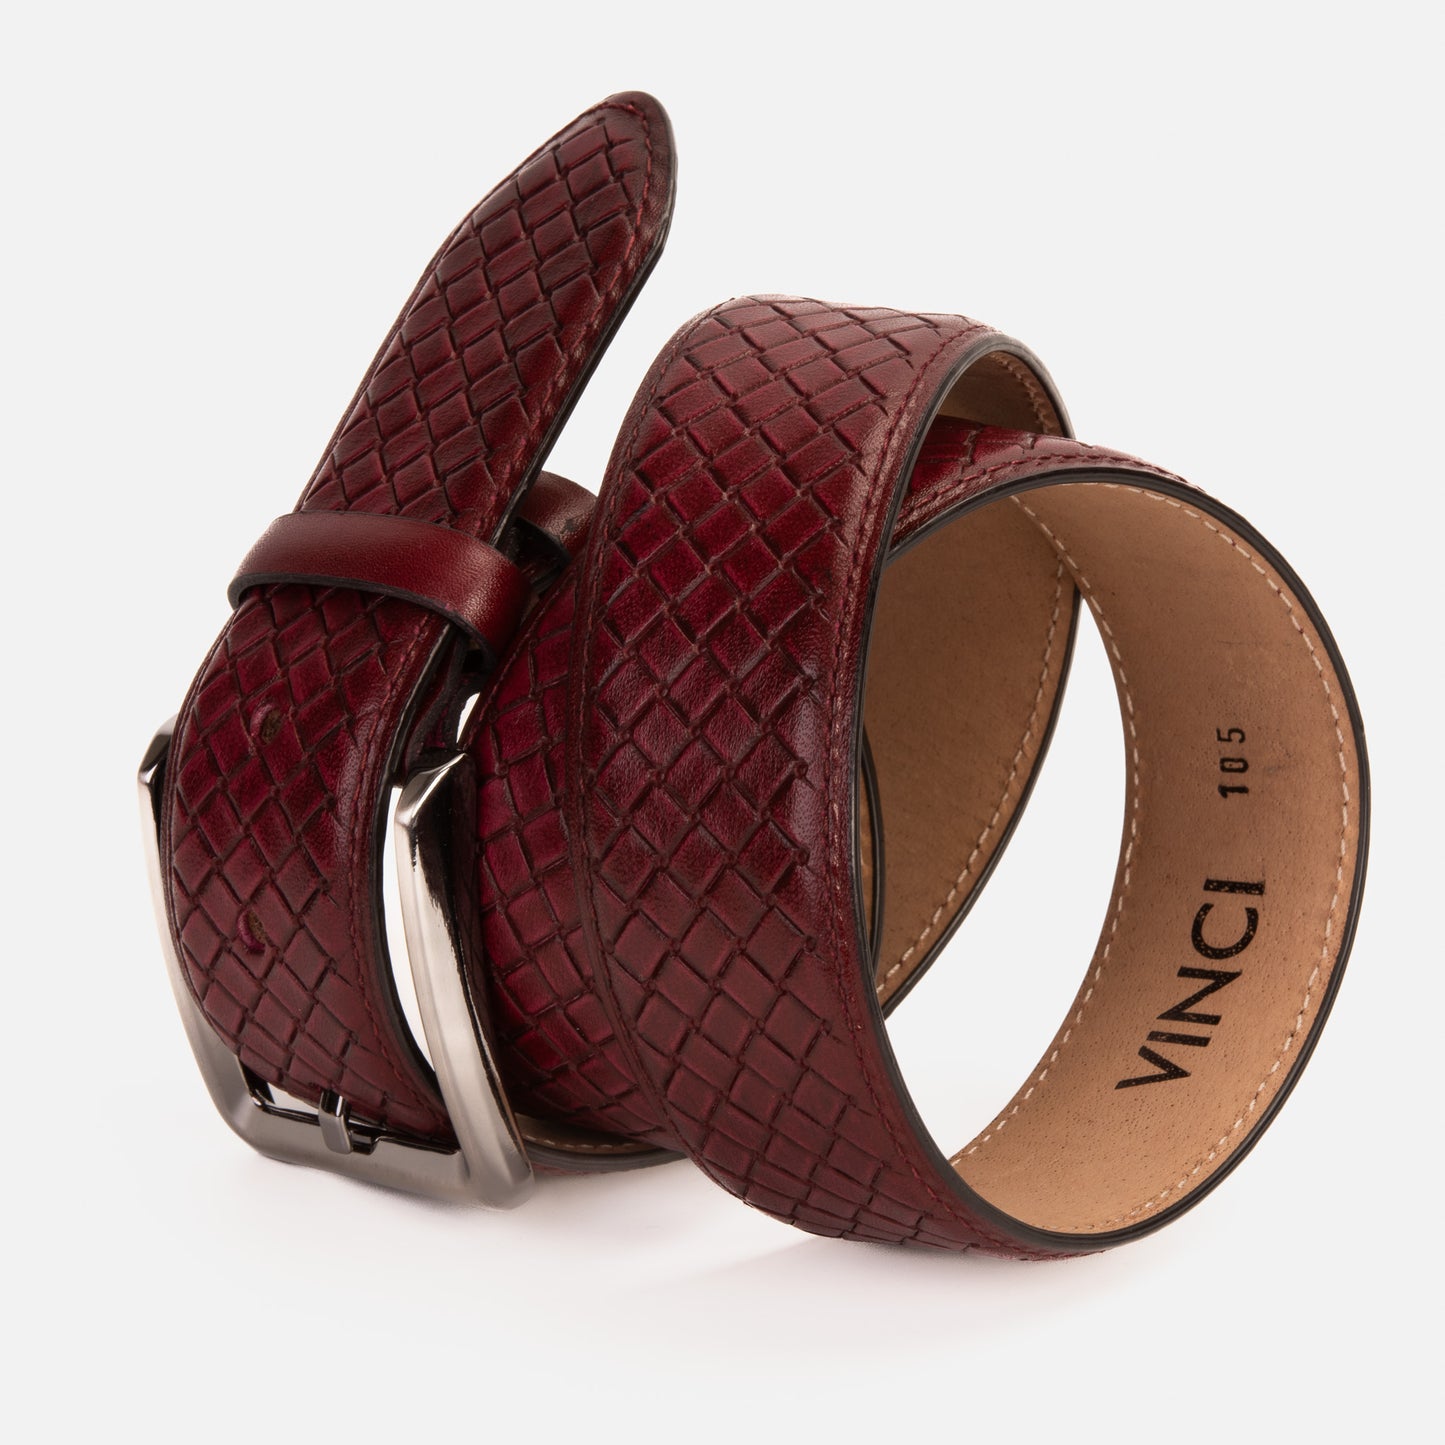 The Layla Burgundy Woven Pattern Leather Belt